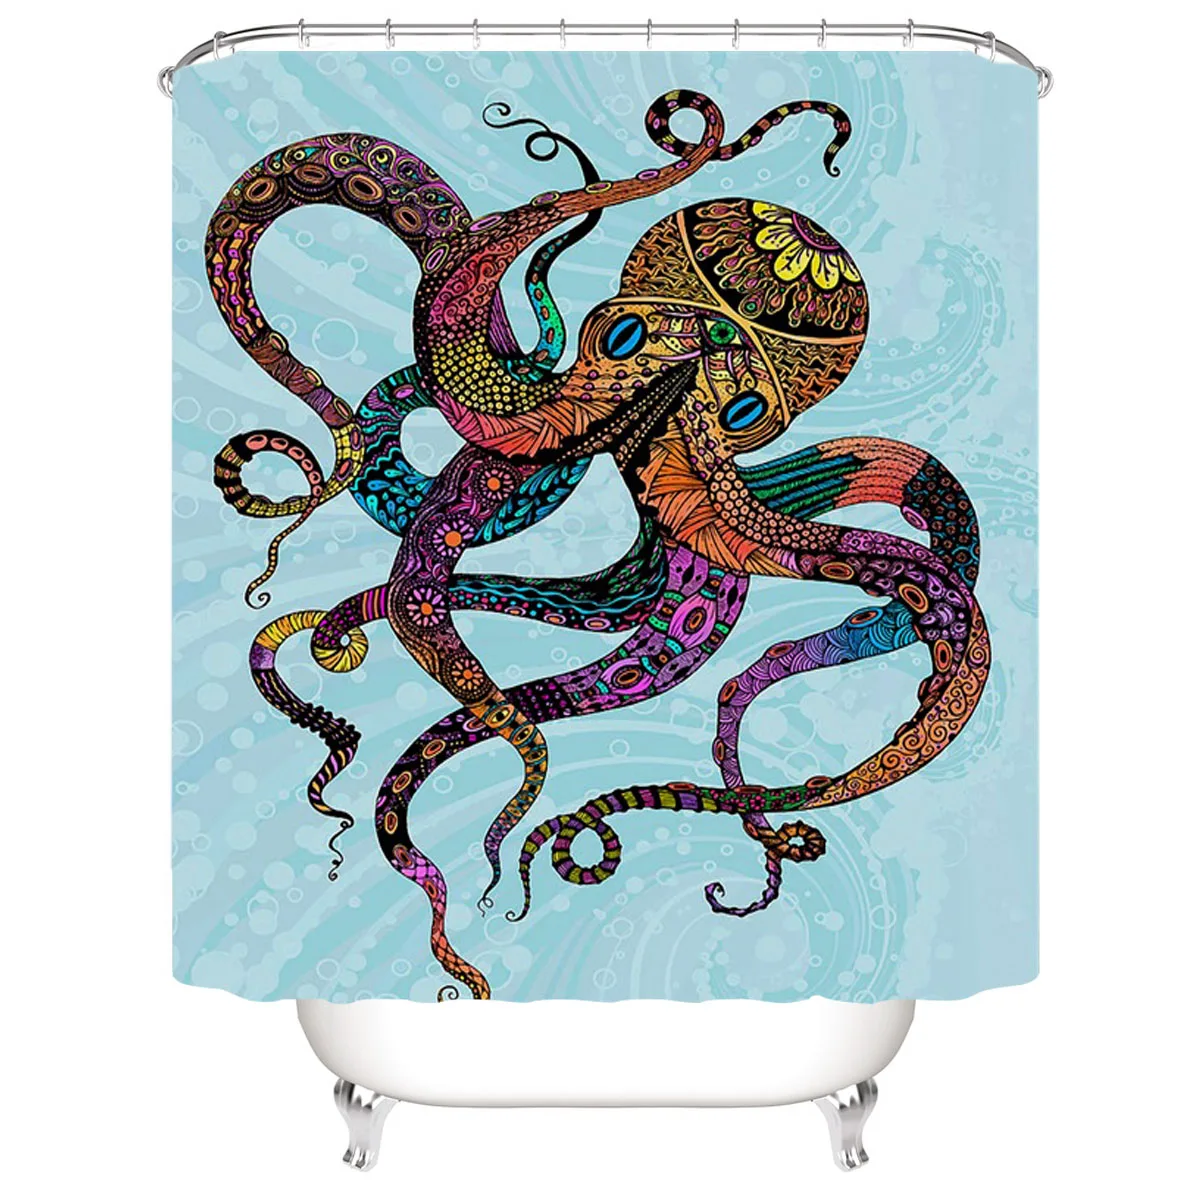 

Custom design waterproof fabric Marine life Cthulhu style octopus shower curtain